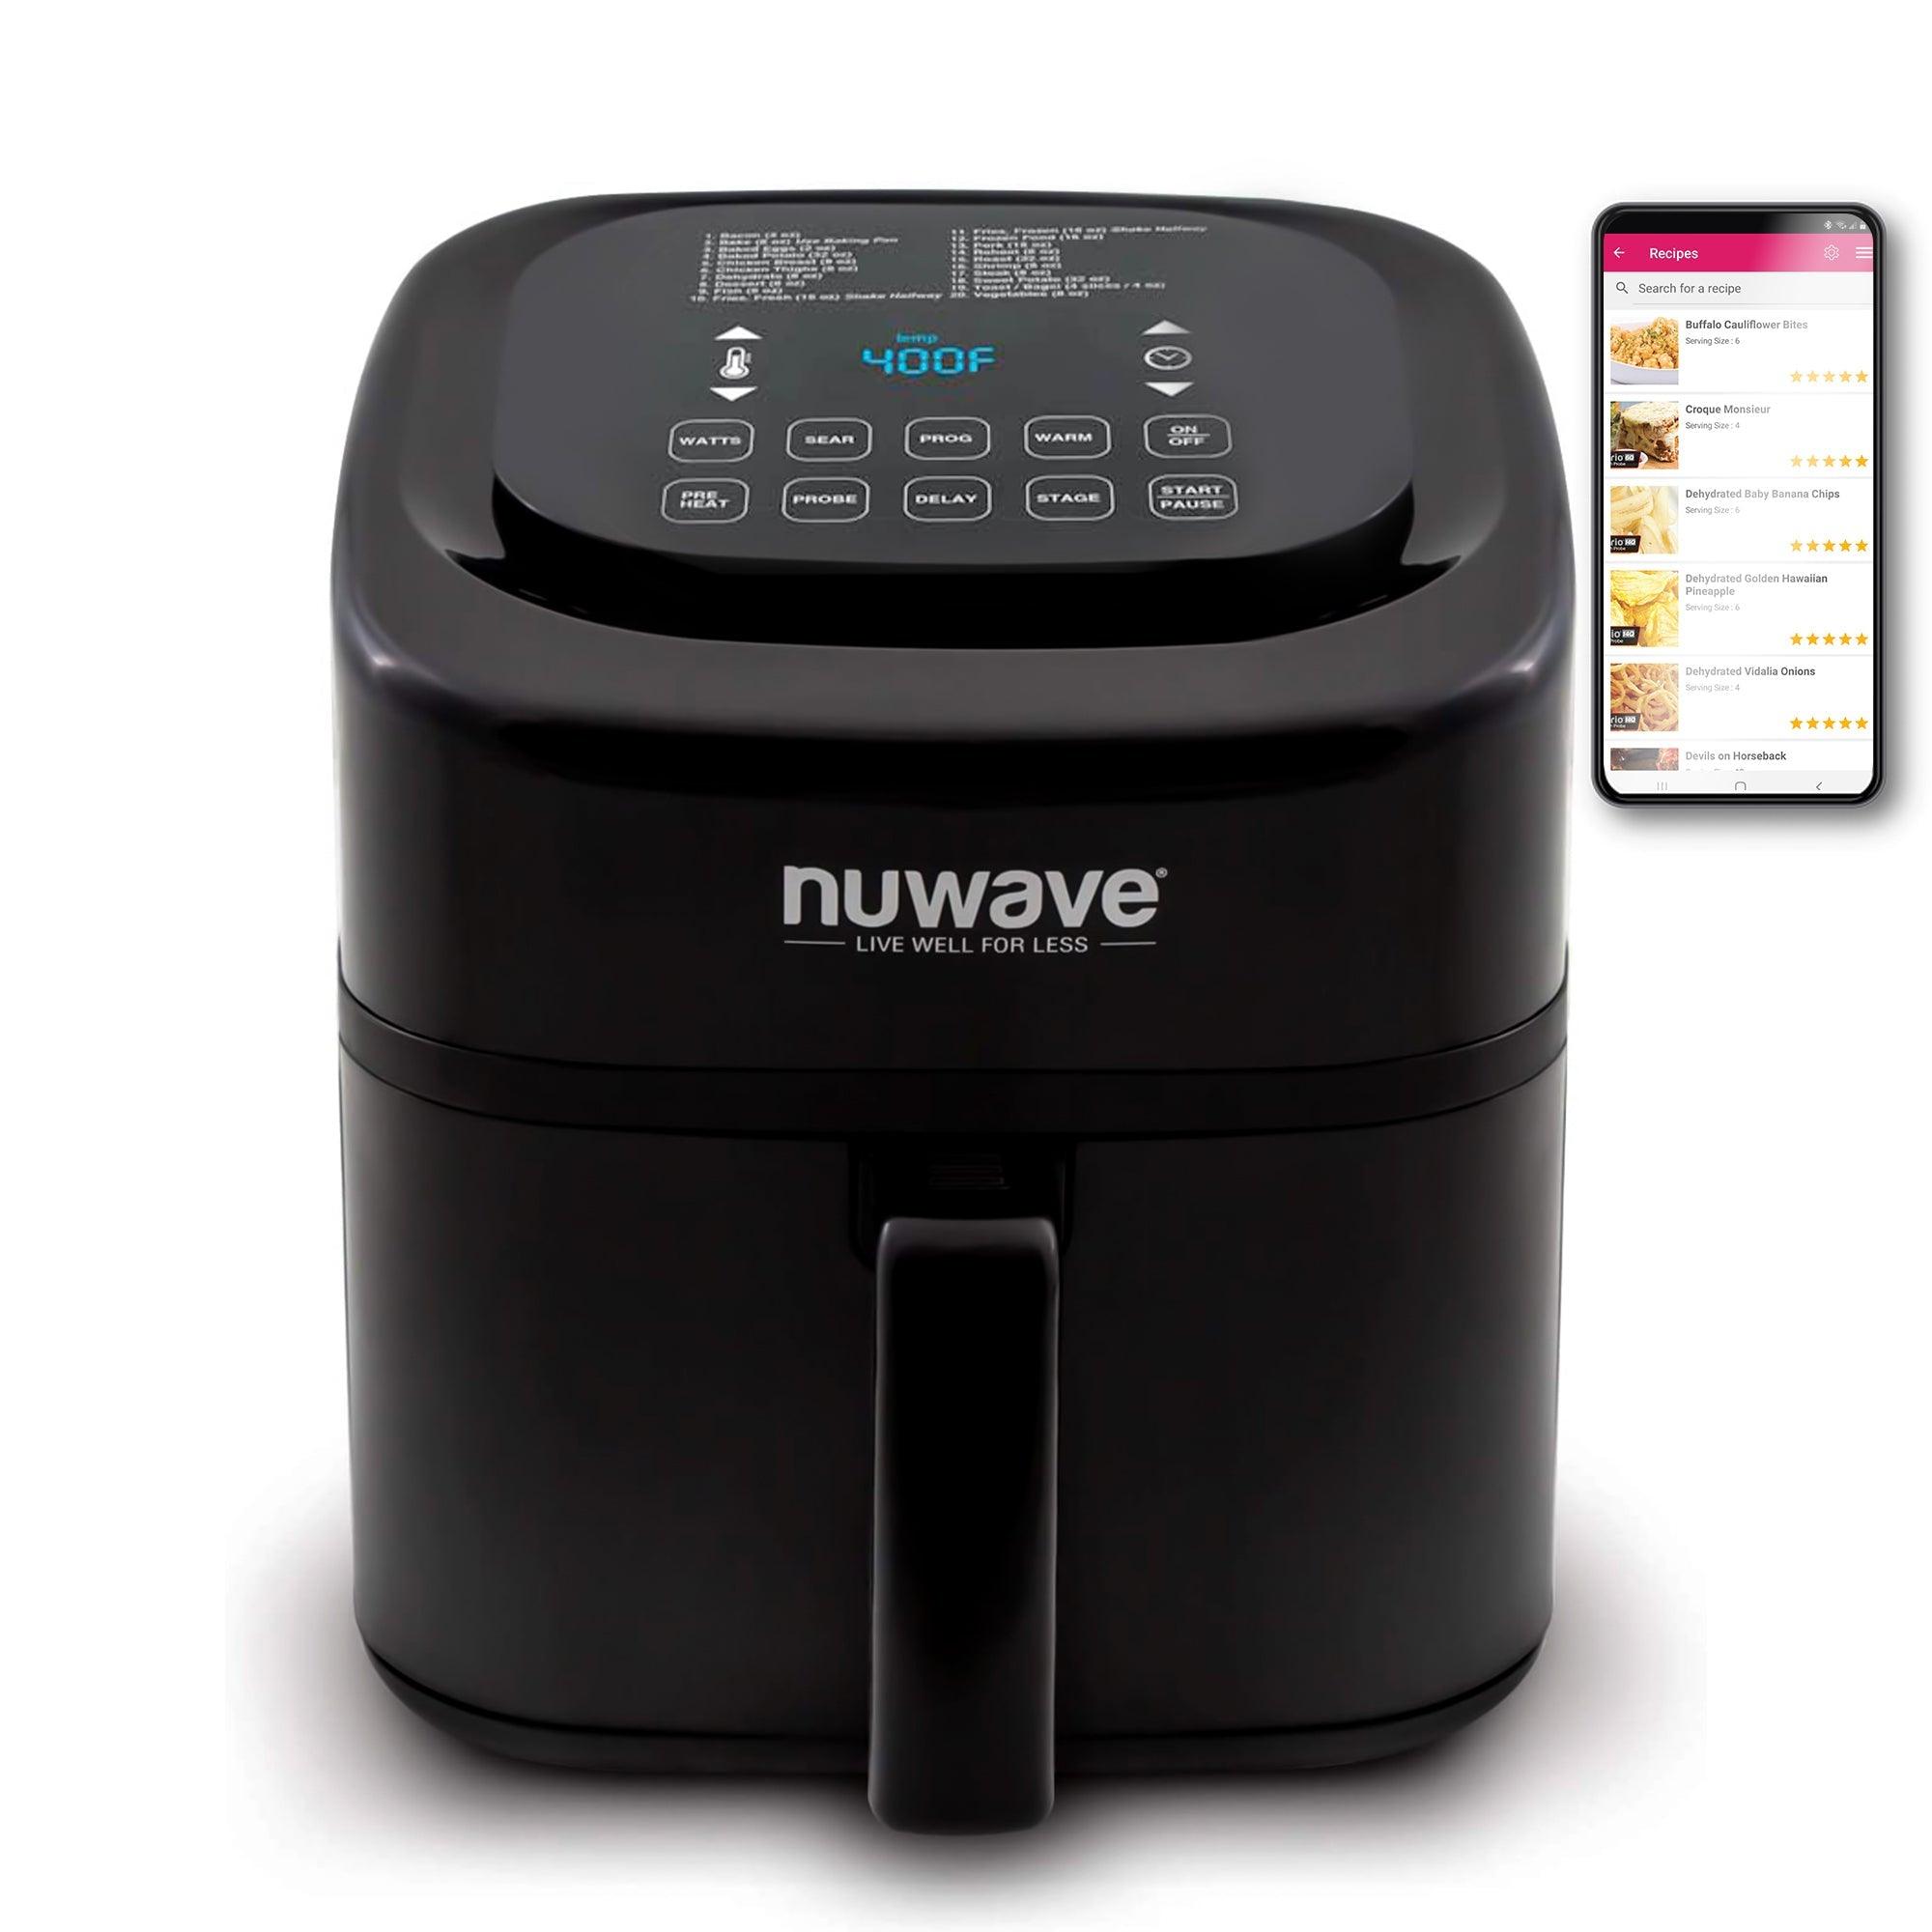 Nuwave Duet Pressure Cooker & Air Fryer Combo BRAND NEW BOX NOT